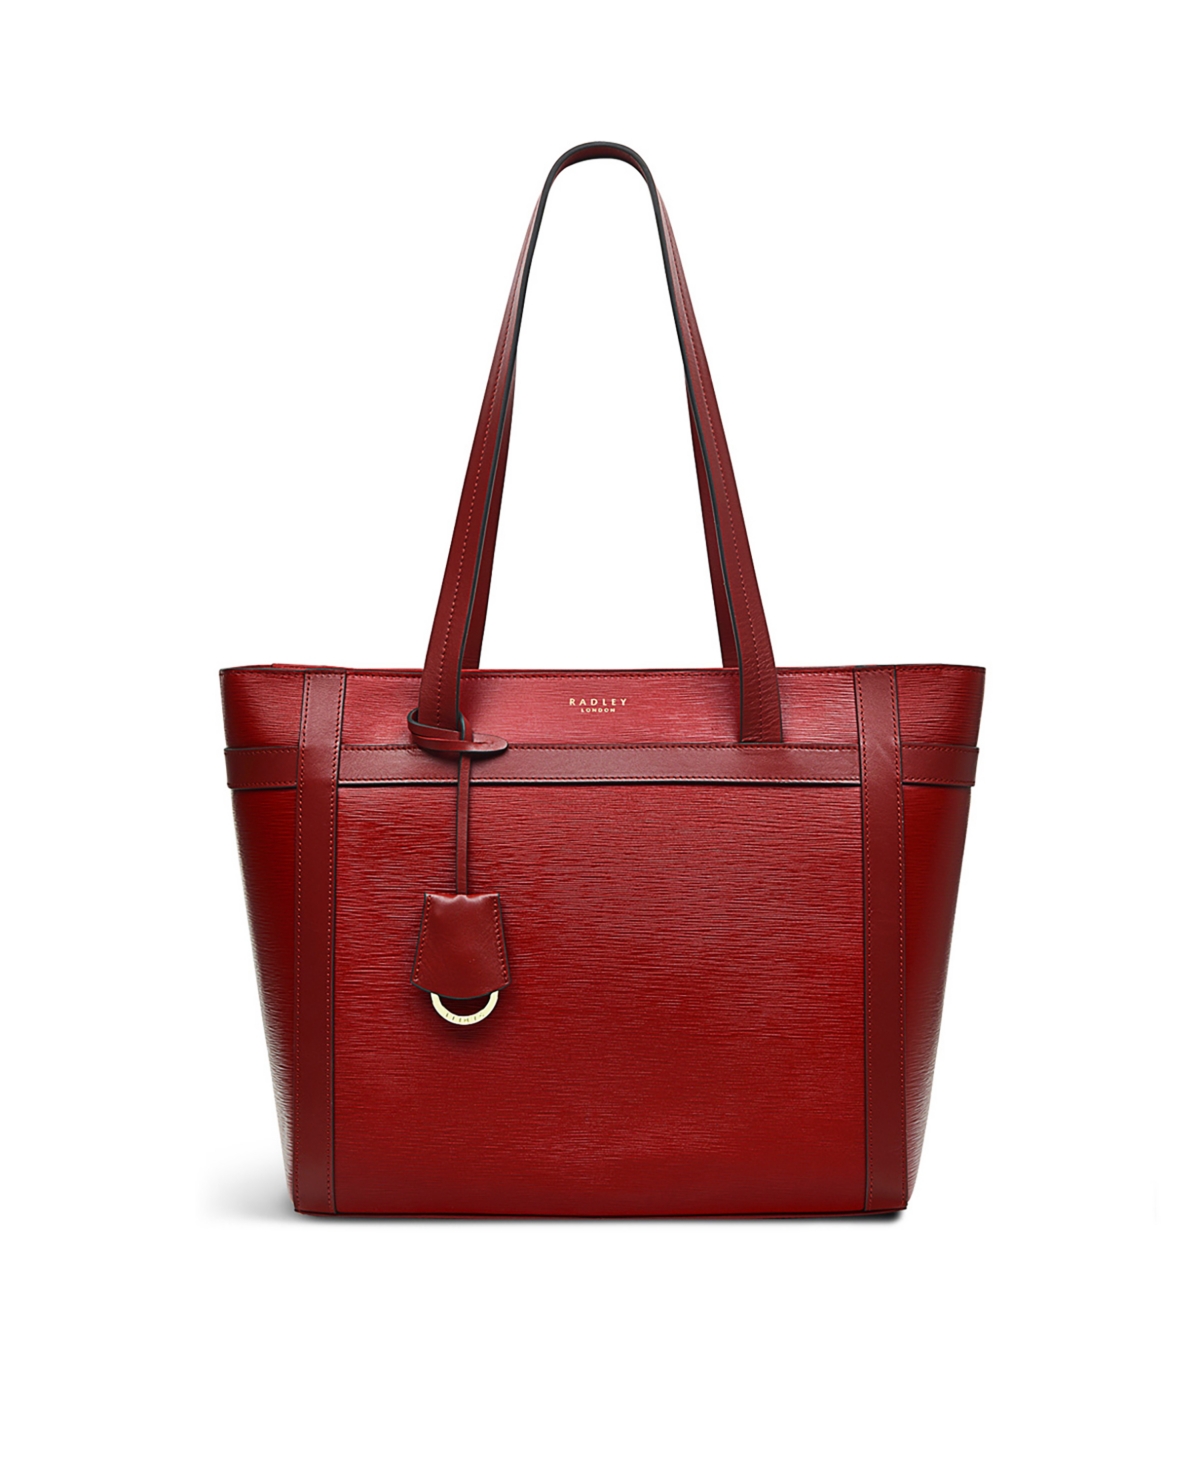 RADLEY London Piccardy Hill Women's Leather Shoulder Bag - Medium Size  Purse - Women's Shoulder Handbag